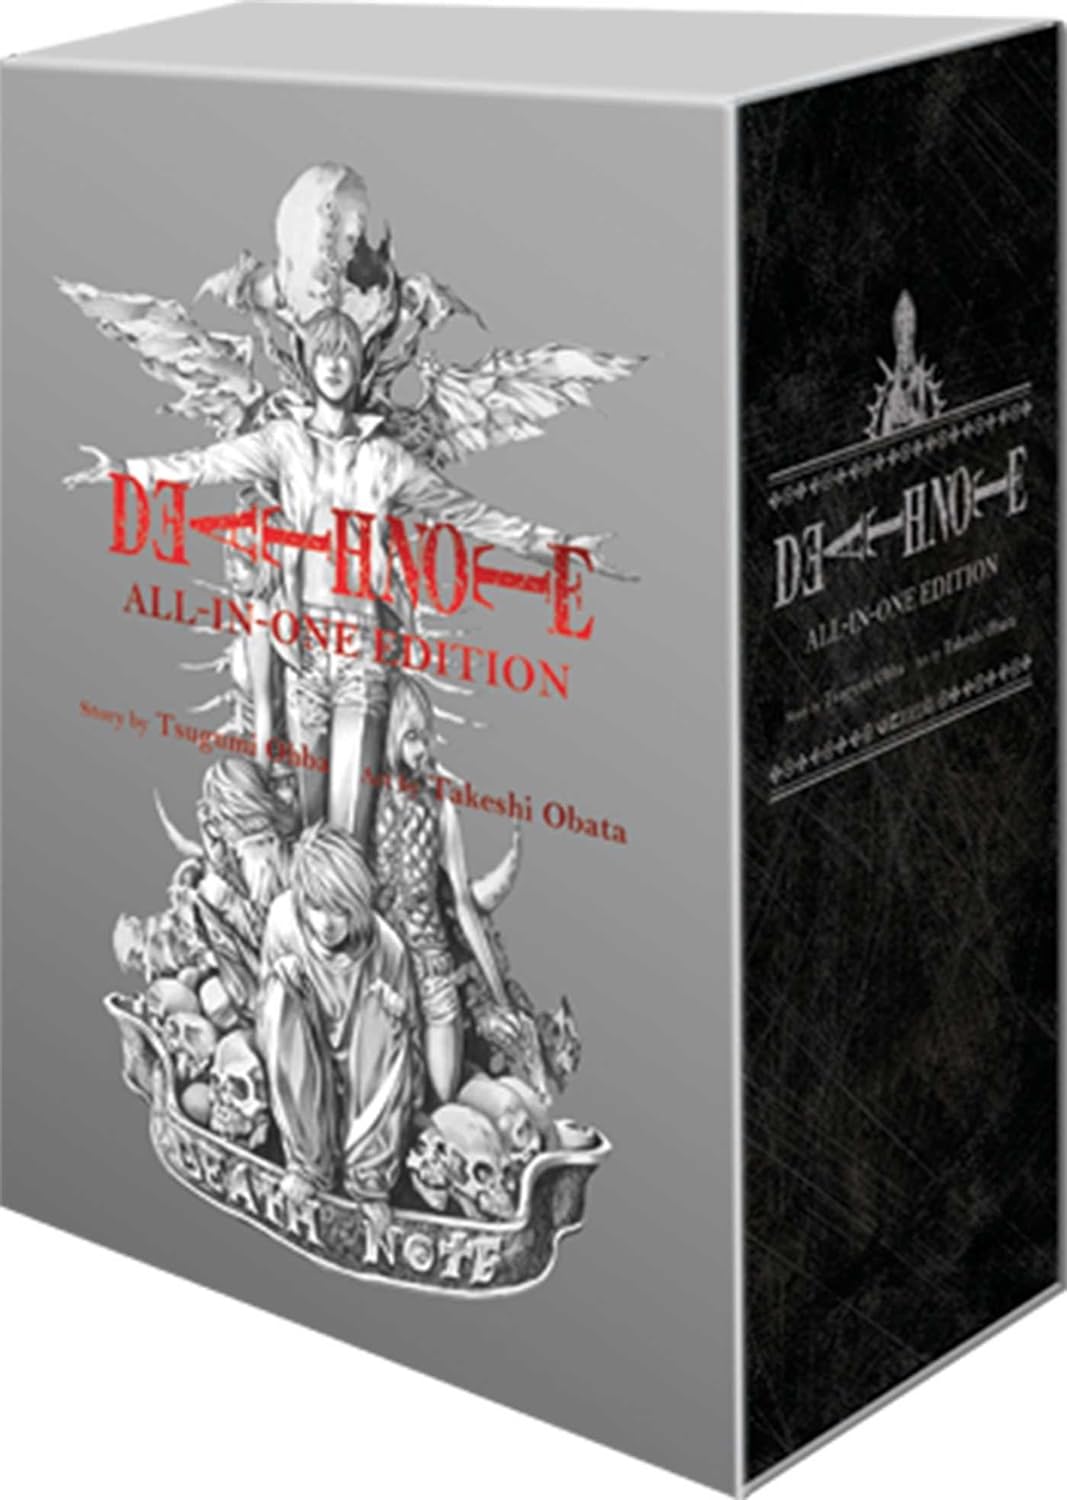 Death Note (All-In-One Edition) -- Tsugumi Ohba